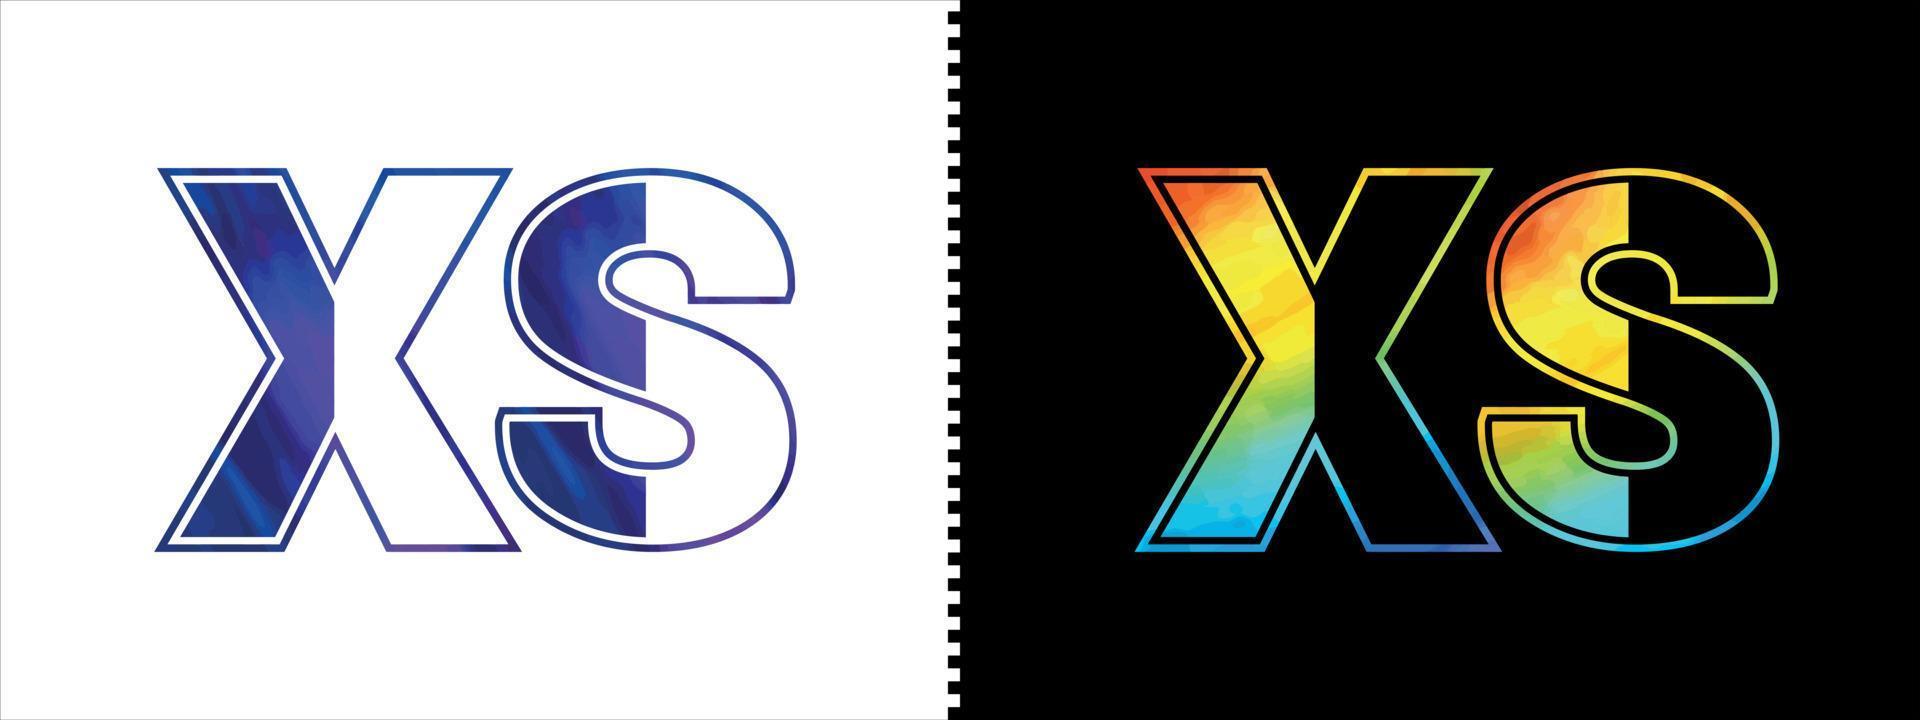 Unique XS letter logo Icon vector template. Premium stylish alphabet logo design for corporate business